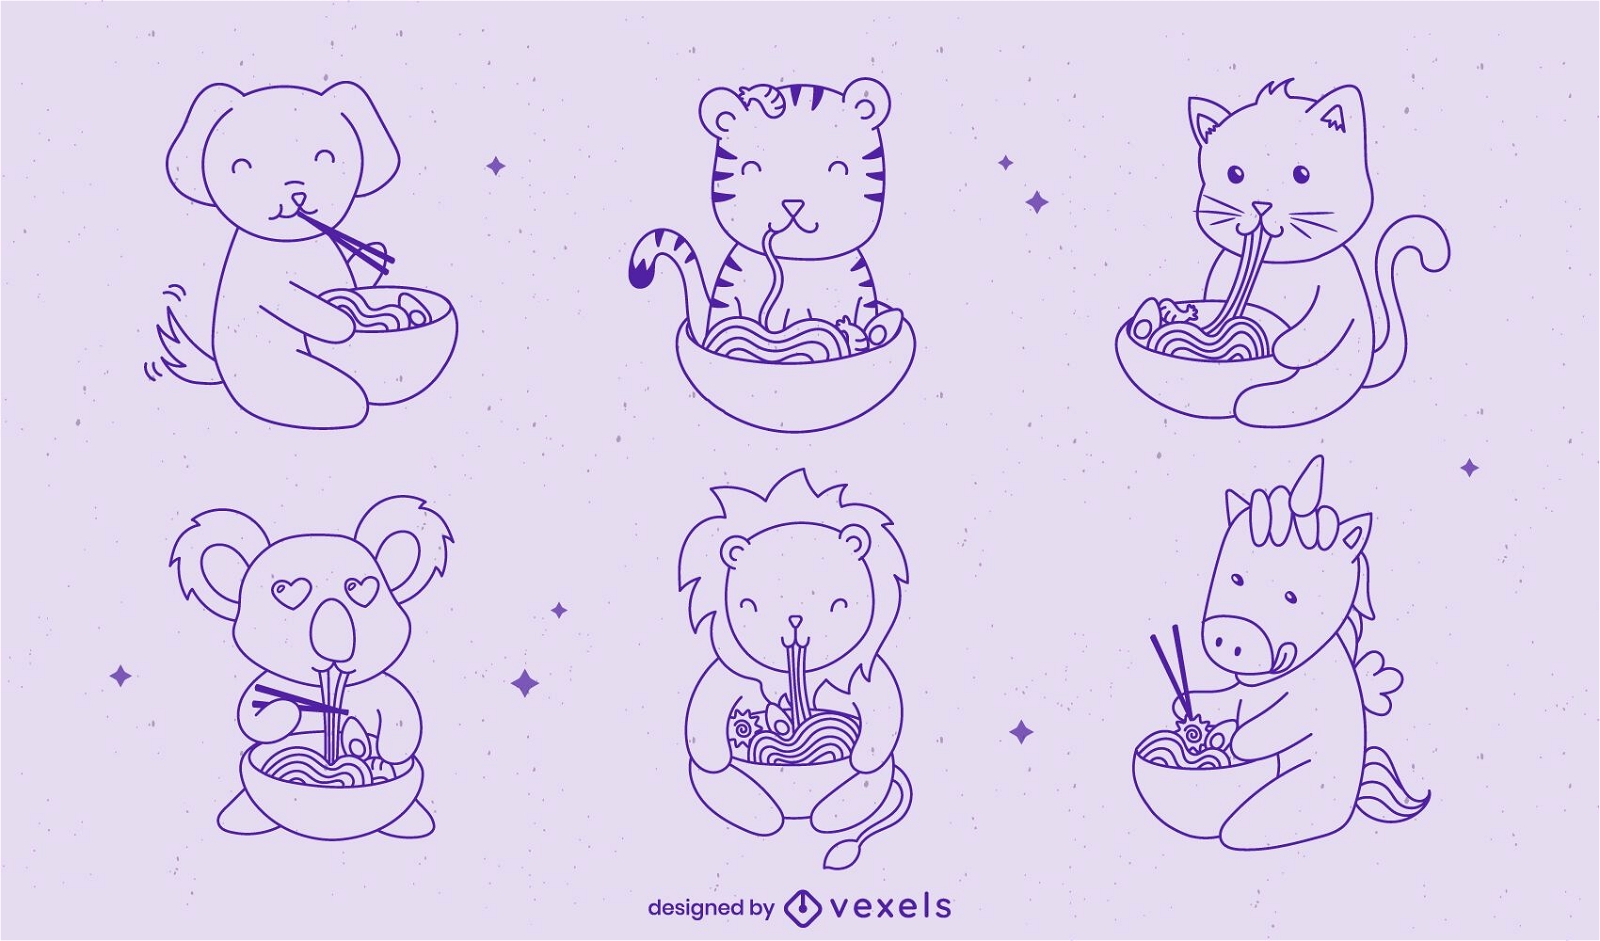 Animais beb?s comendo ramen com comida conjunto de caracteres